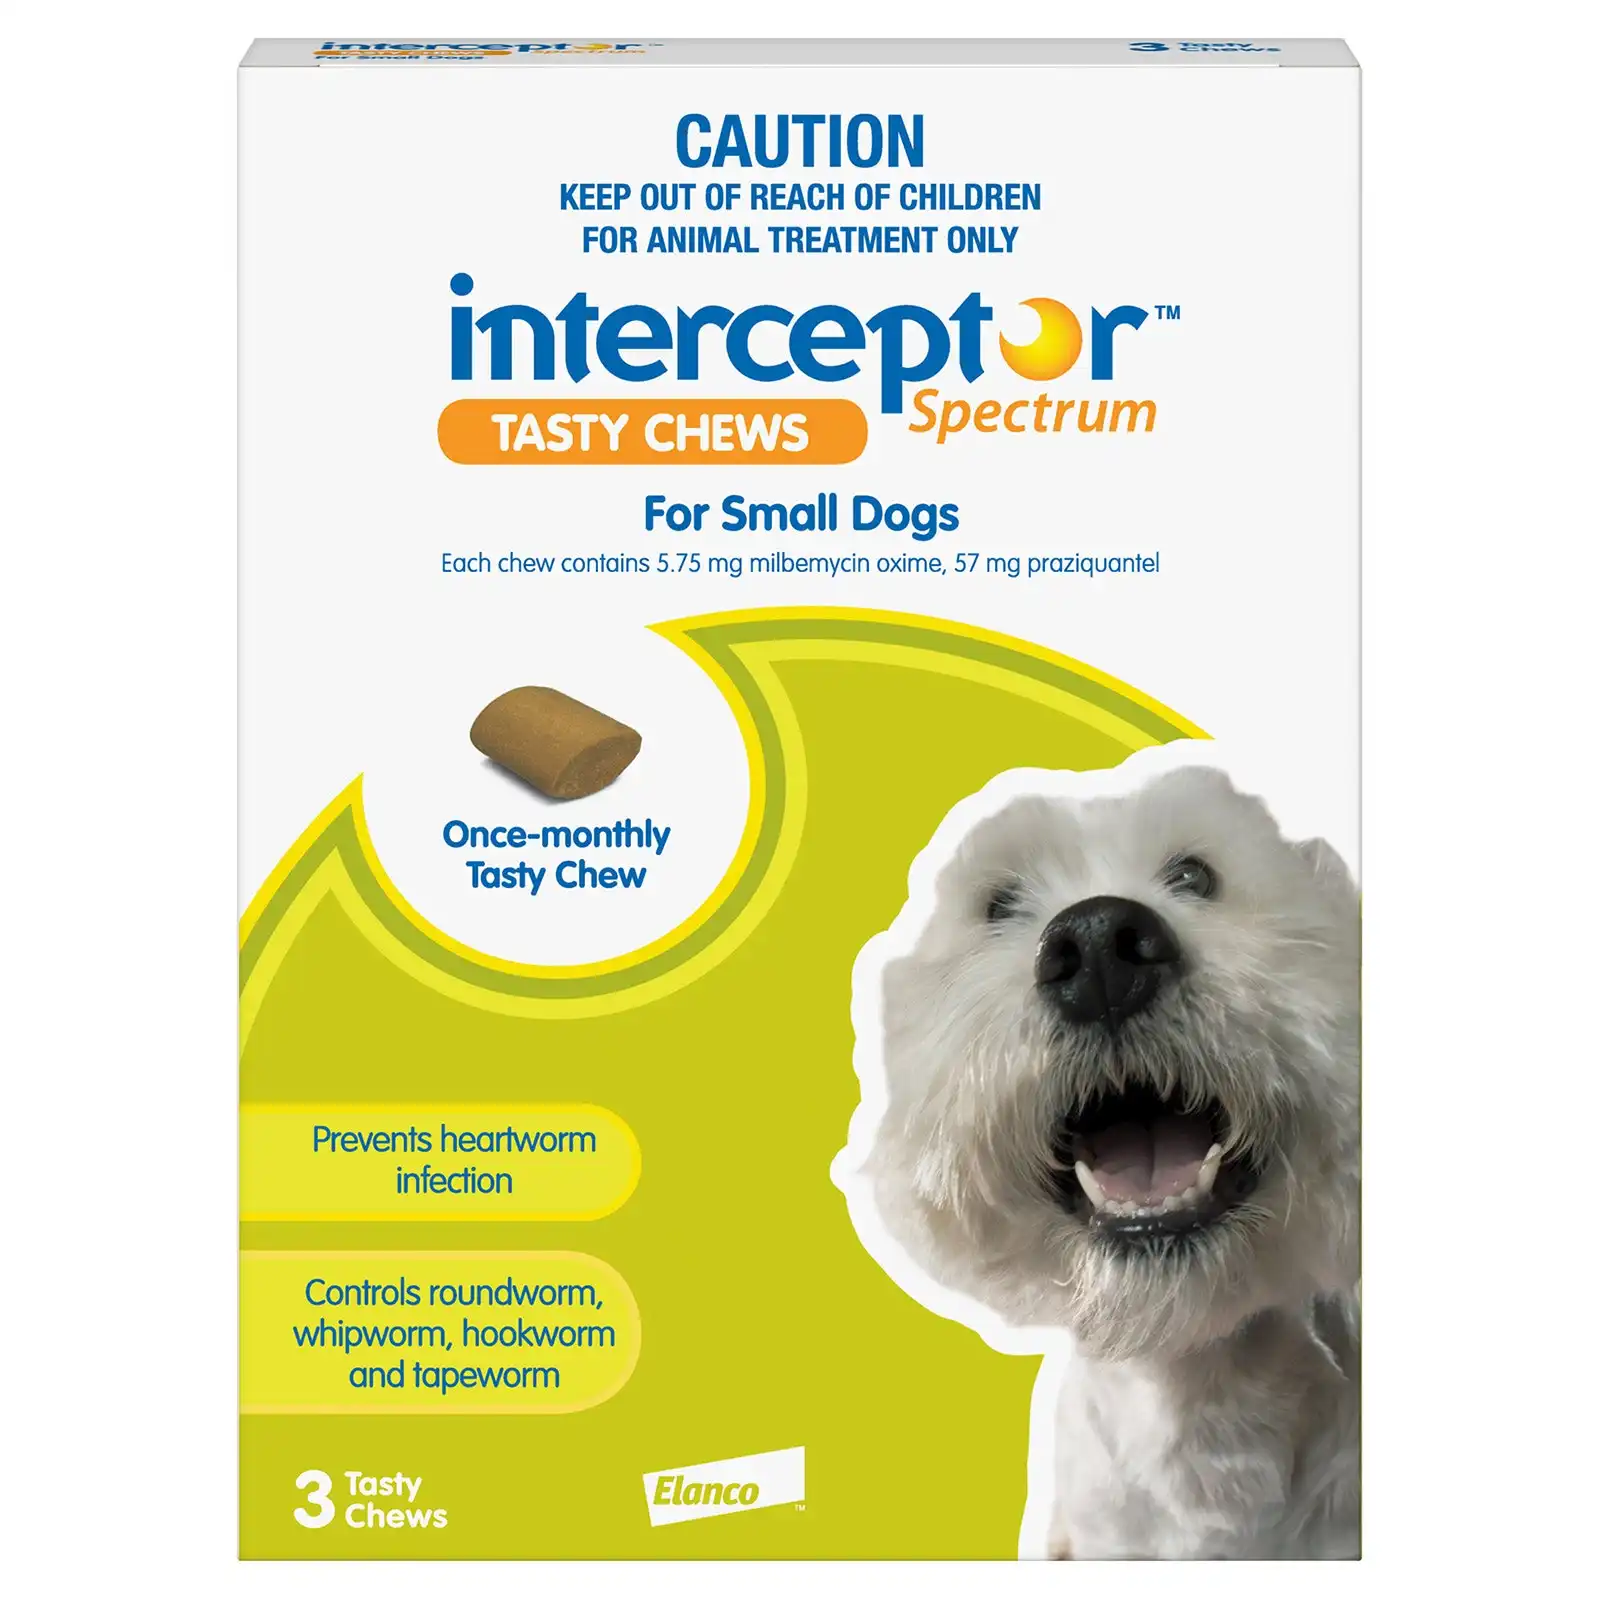 Interceptor Spectrum Tasty Chews For Small Dogs 4 To 11Kg (Green) 12 Chews